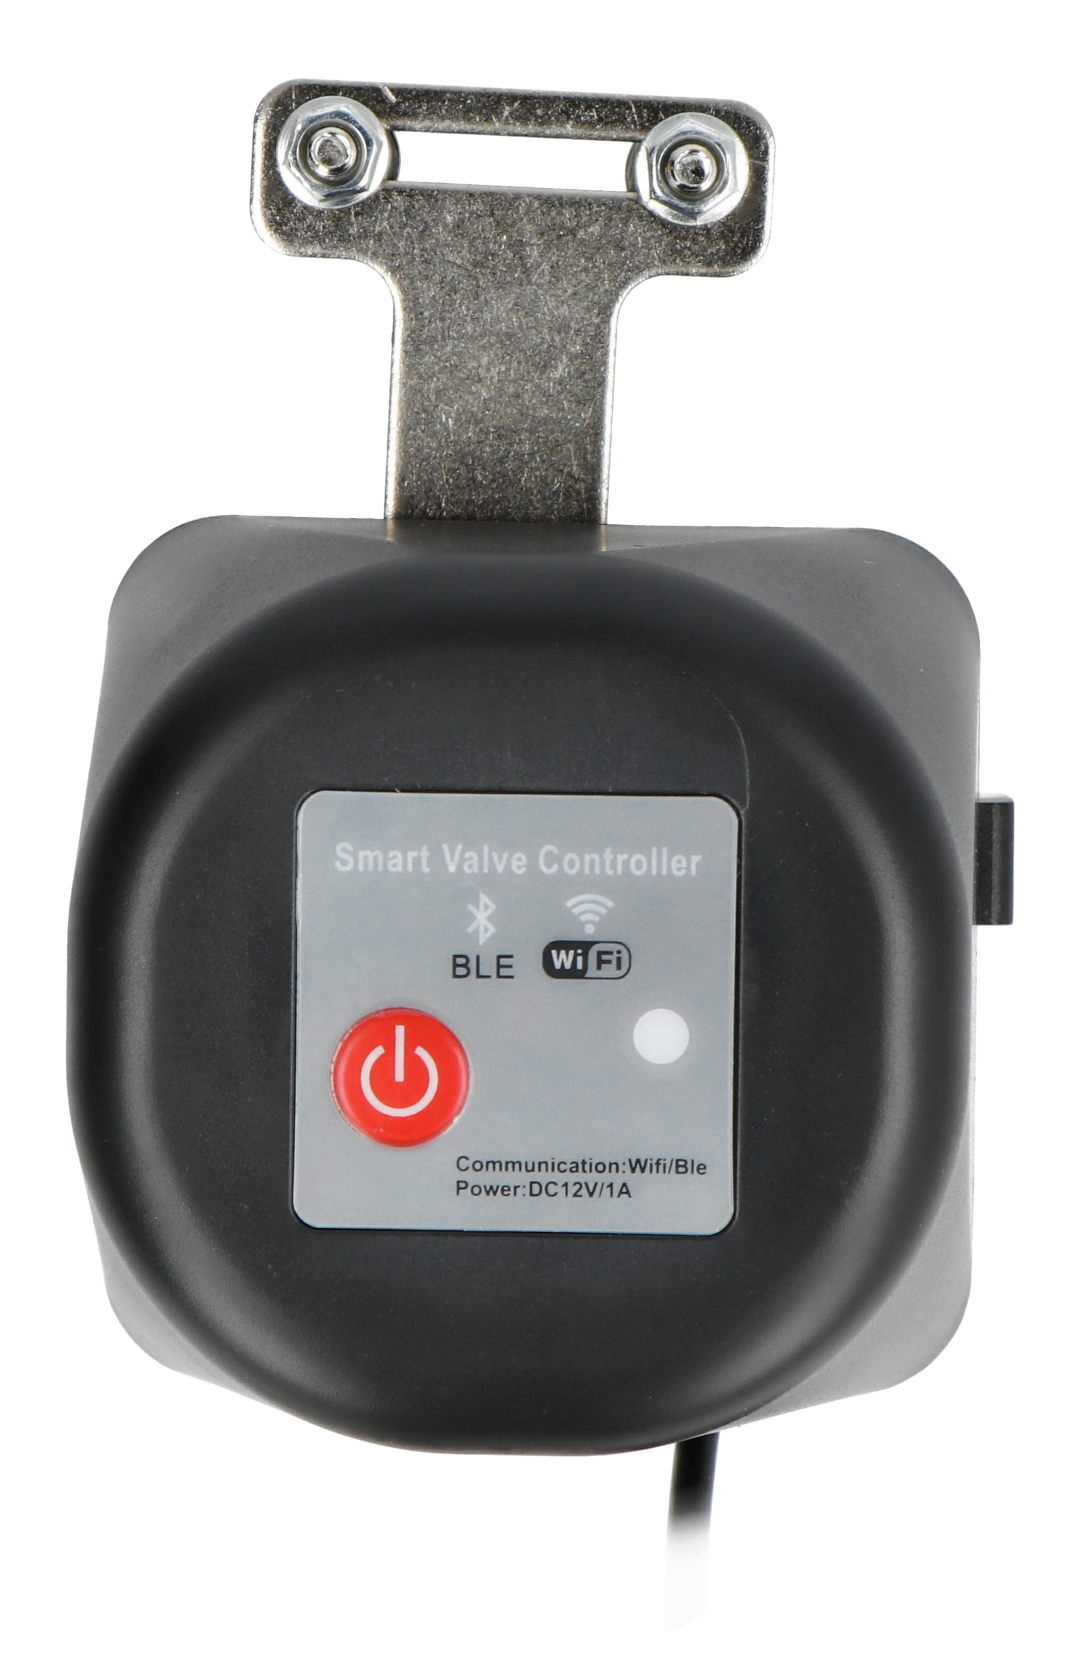 Aqara Smart Plug EU – Smarte ZigBee -Steckdose mit Energiemessung